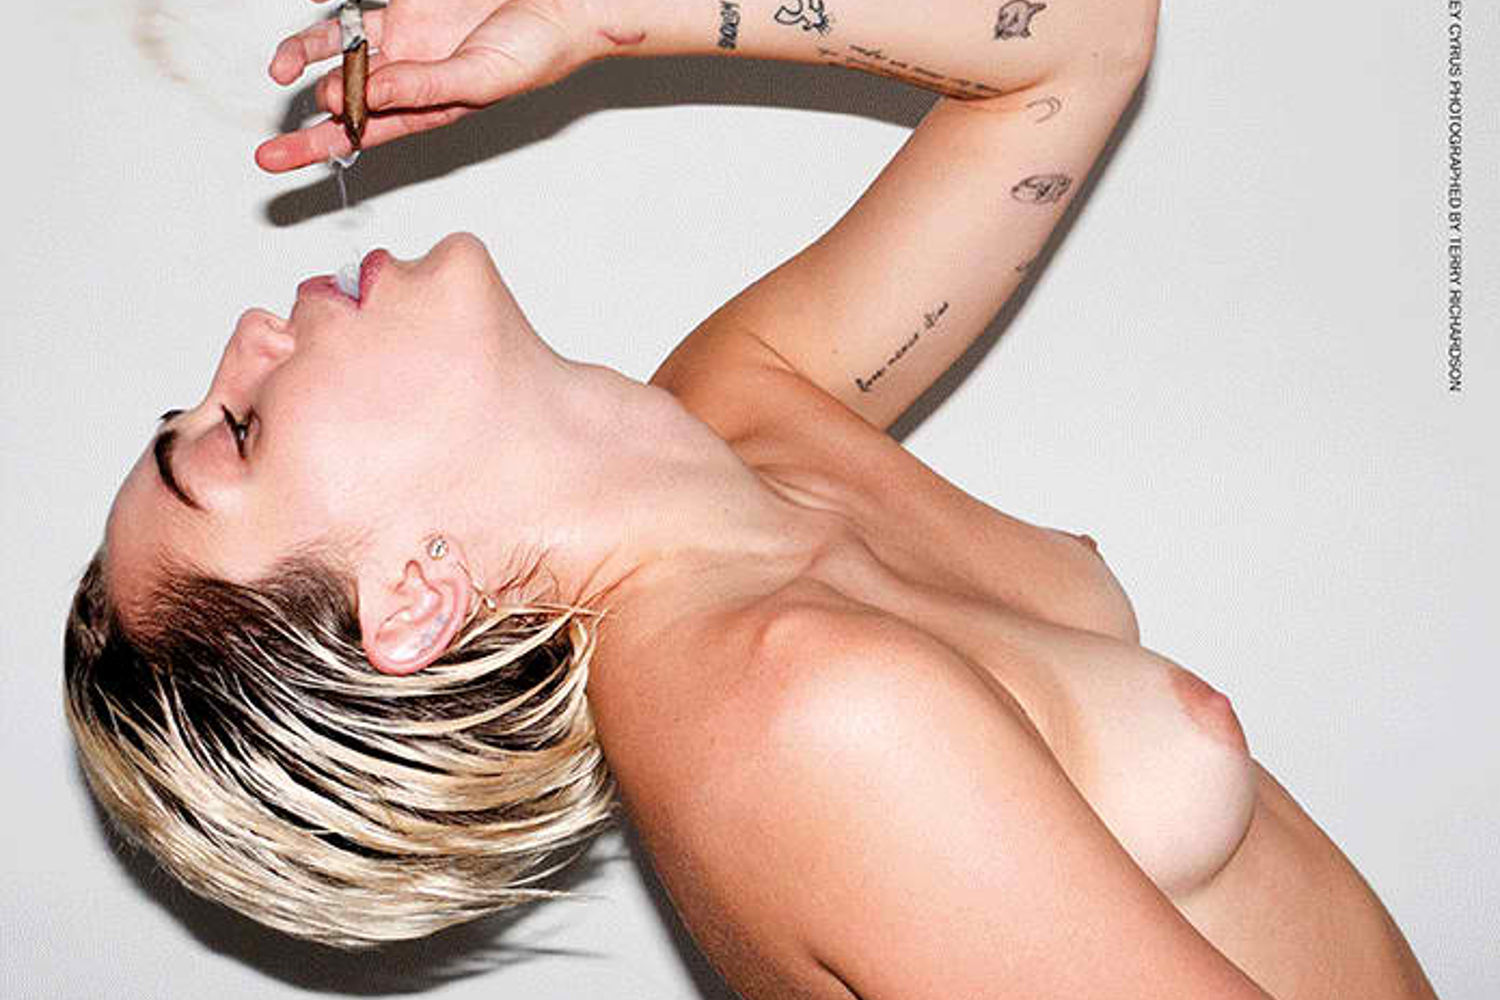 Miley cyress ass nude